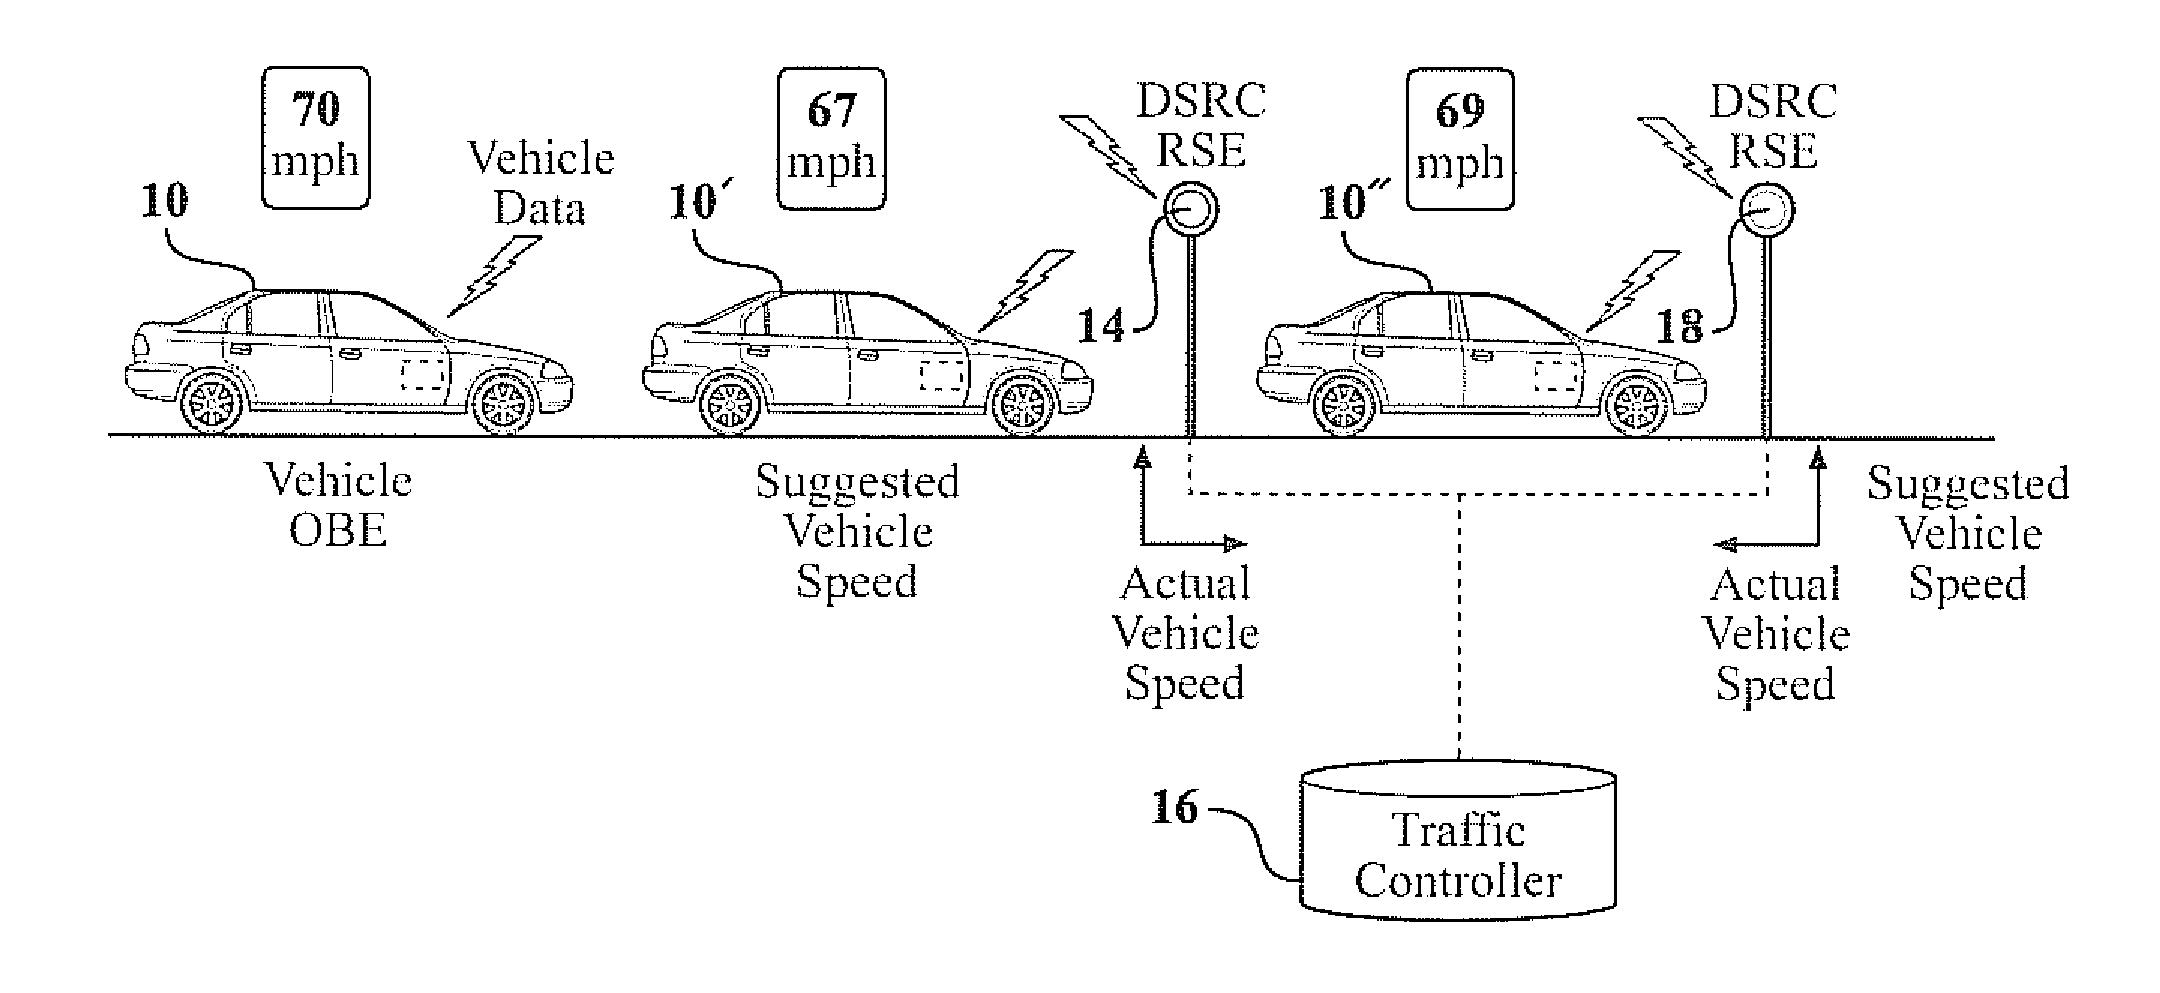 Vehicle speed indication using vehicle-infrastructure wireless communication